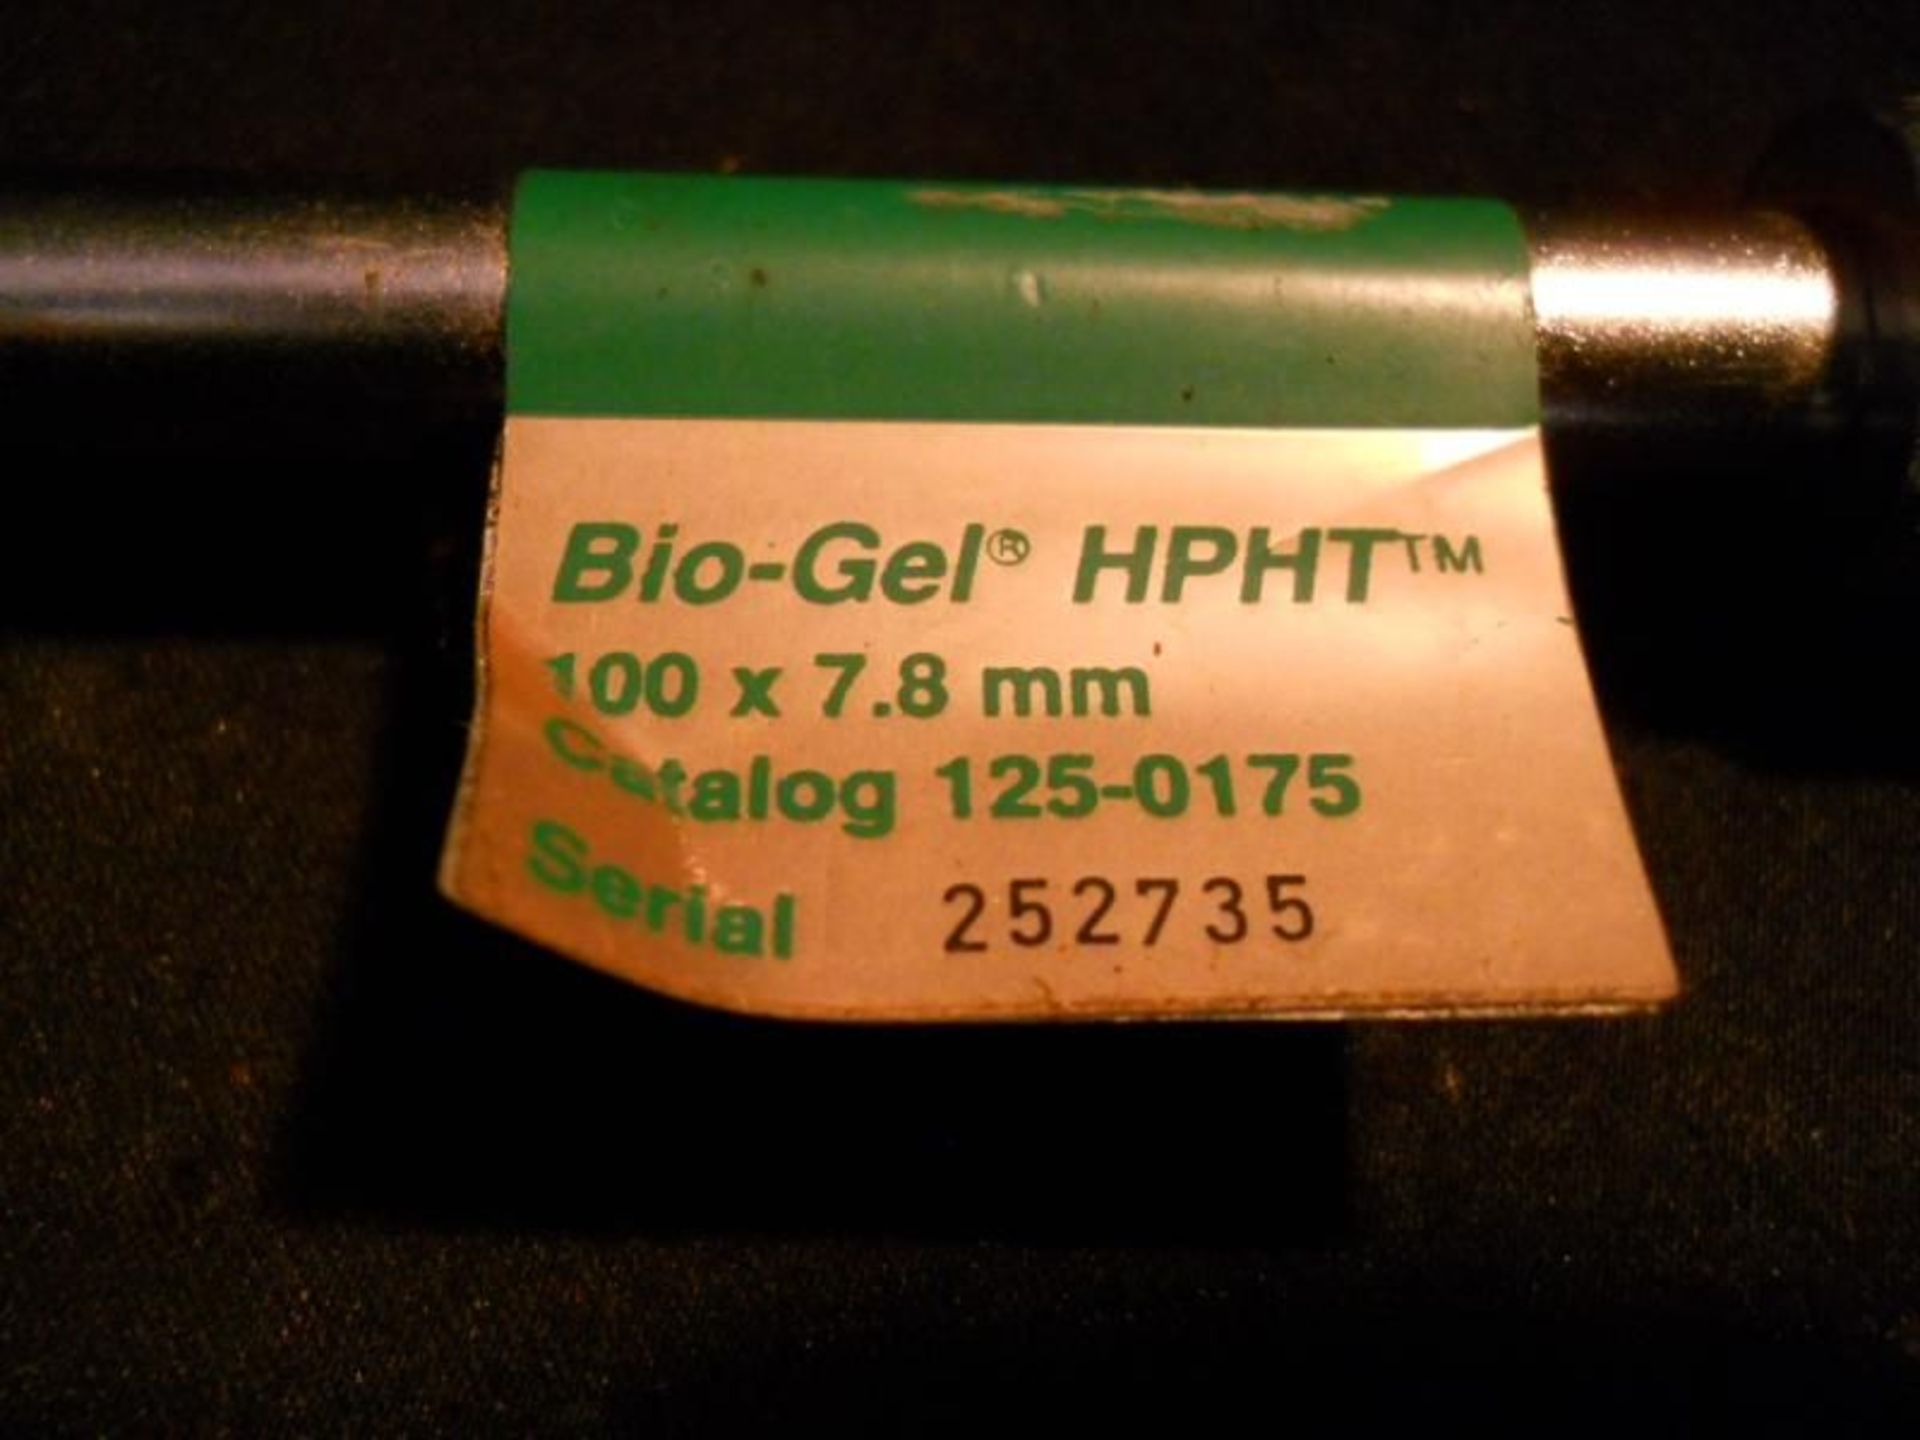 Bio-Rad (BioRad) Bio-Gel HPHT Column 100x7.8 mm Cat # 125-0175 & 125-0176, Qty 1, 321469000640 - Image 2 of 5